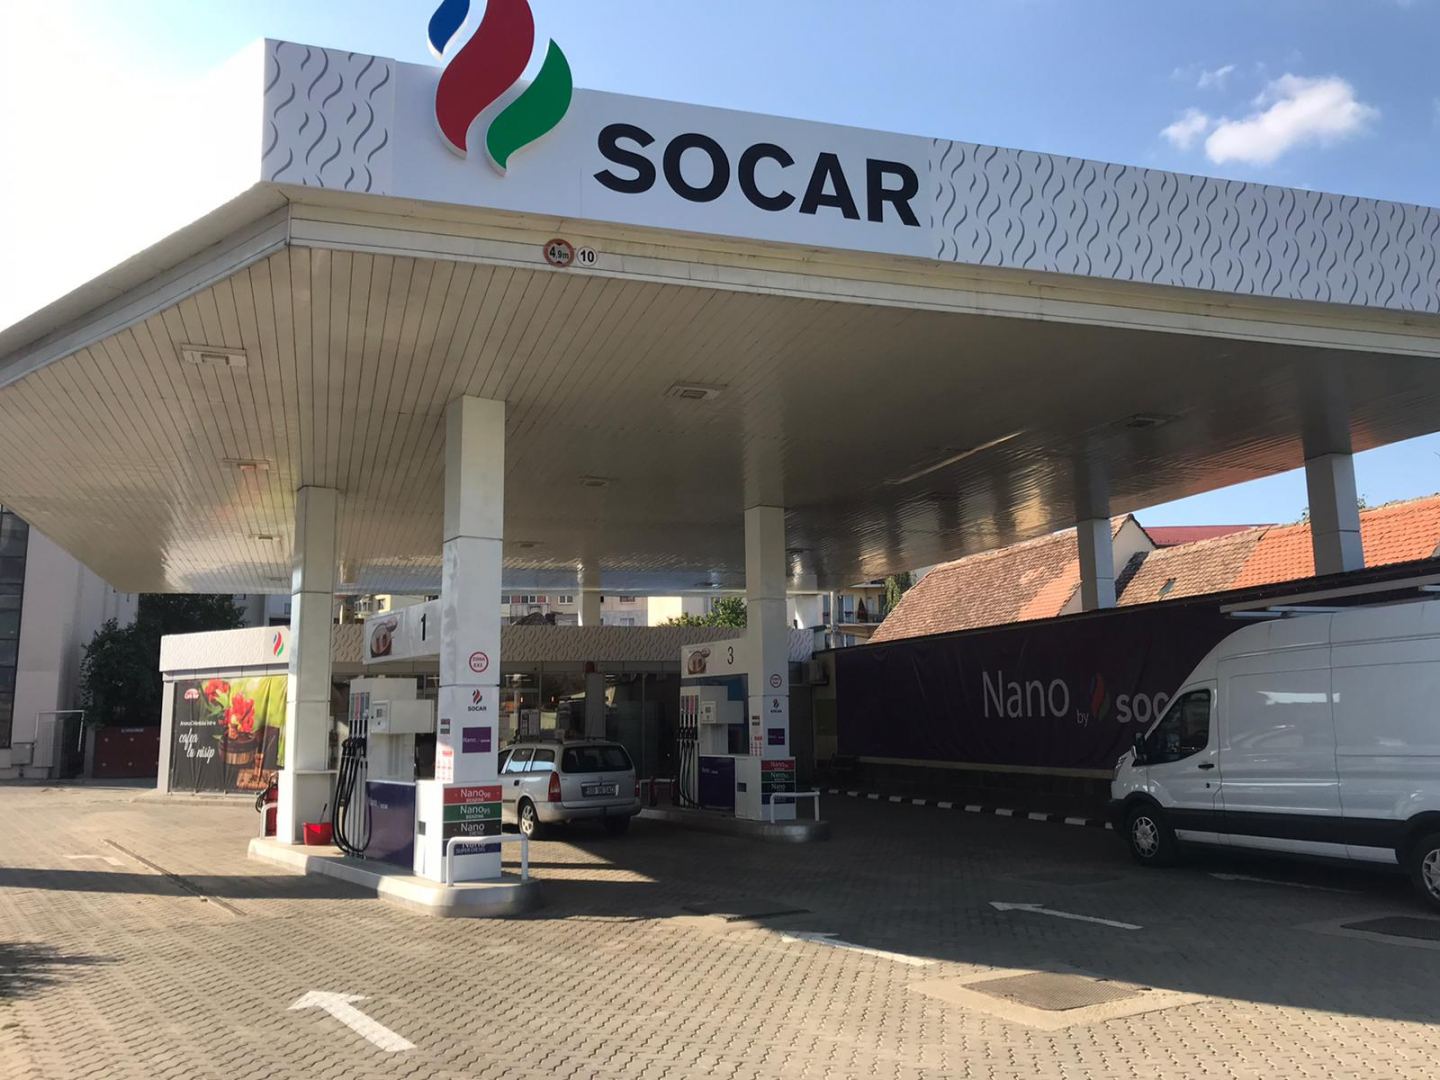 SOCAR’s Romanian subsidiary reports increase in net profit